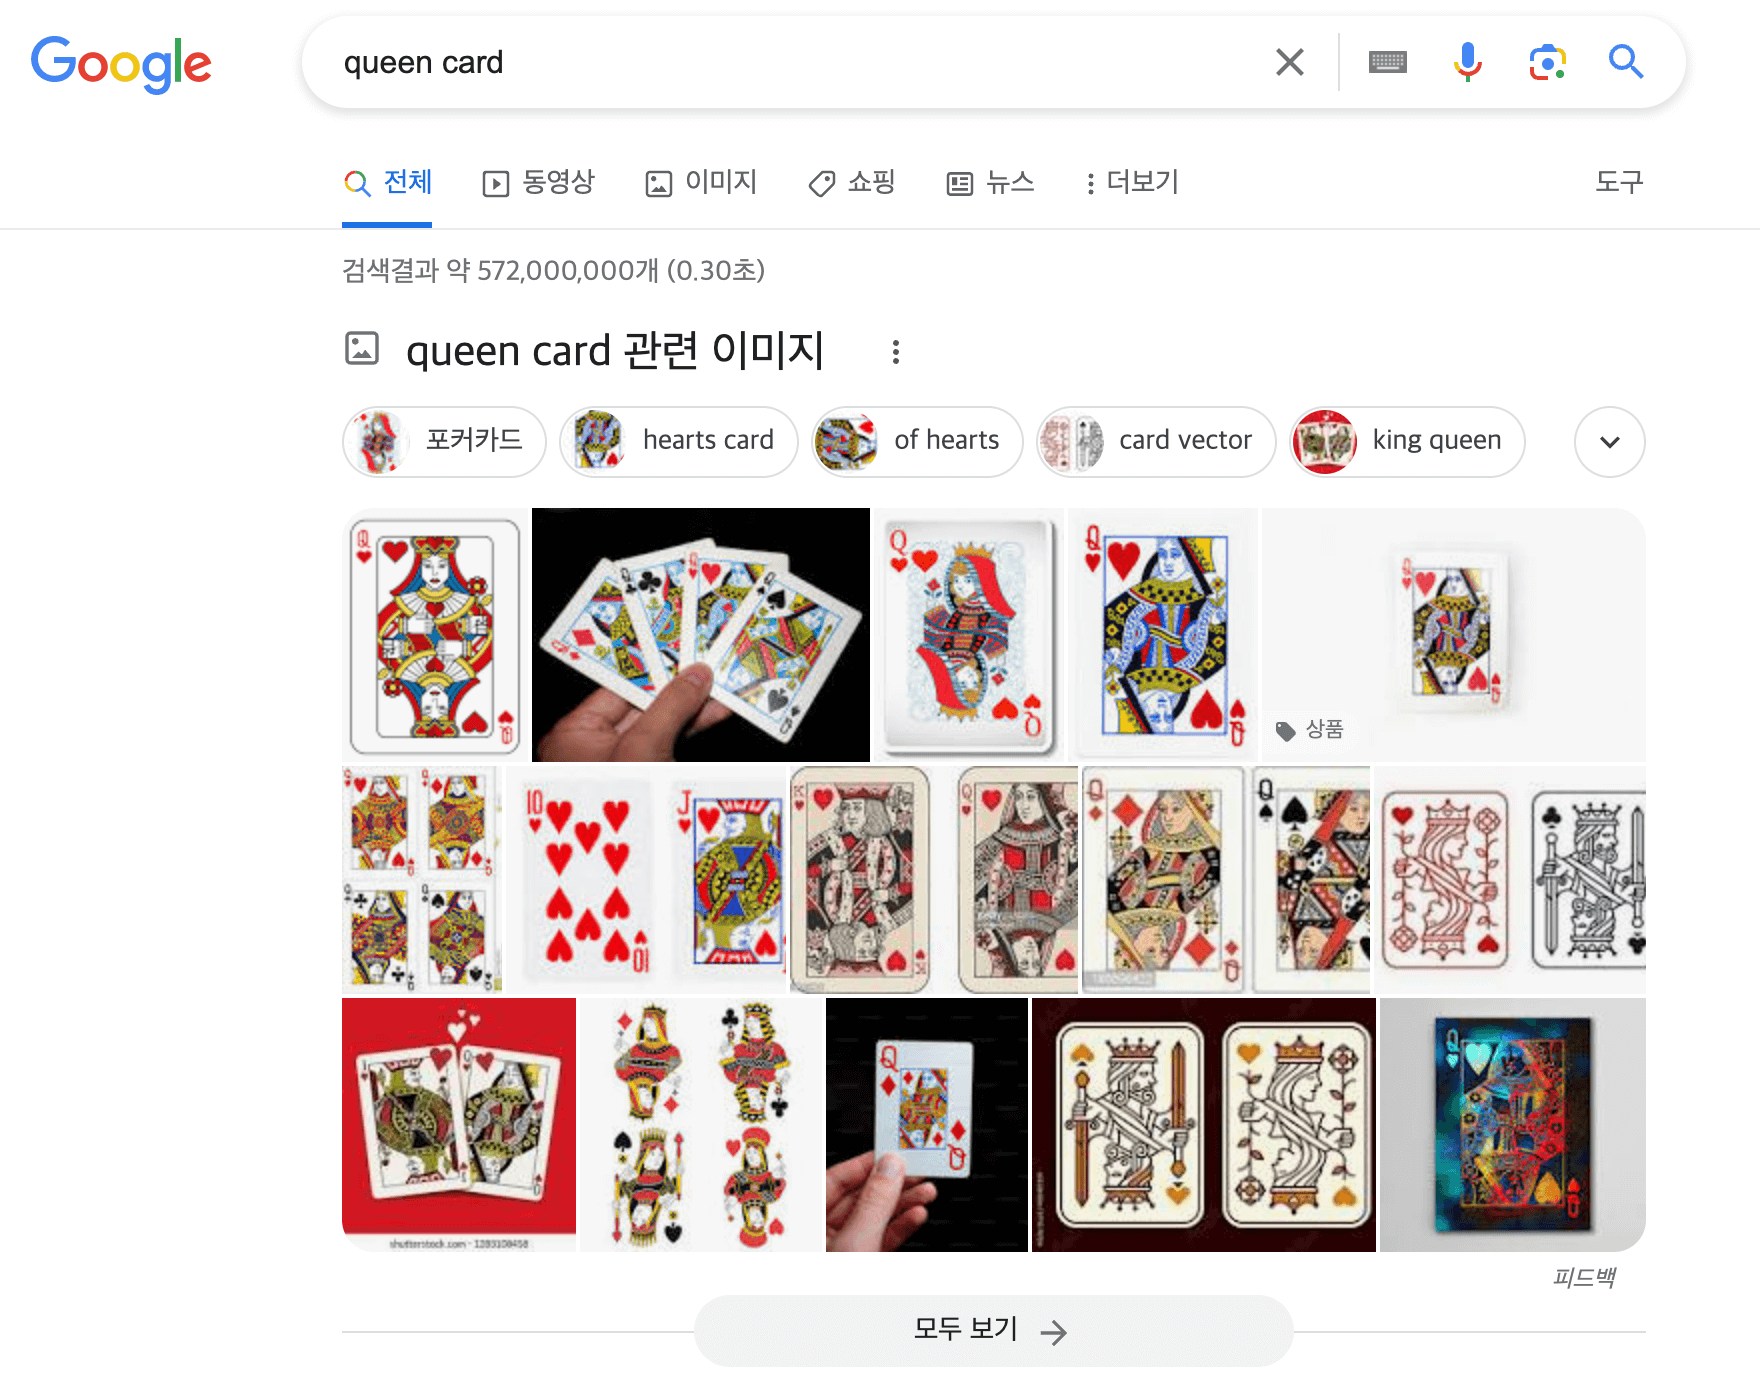 queen card 검색 결과